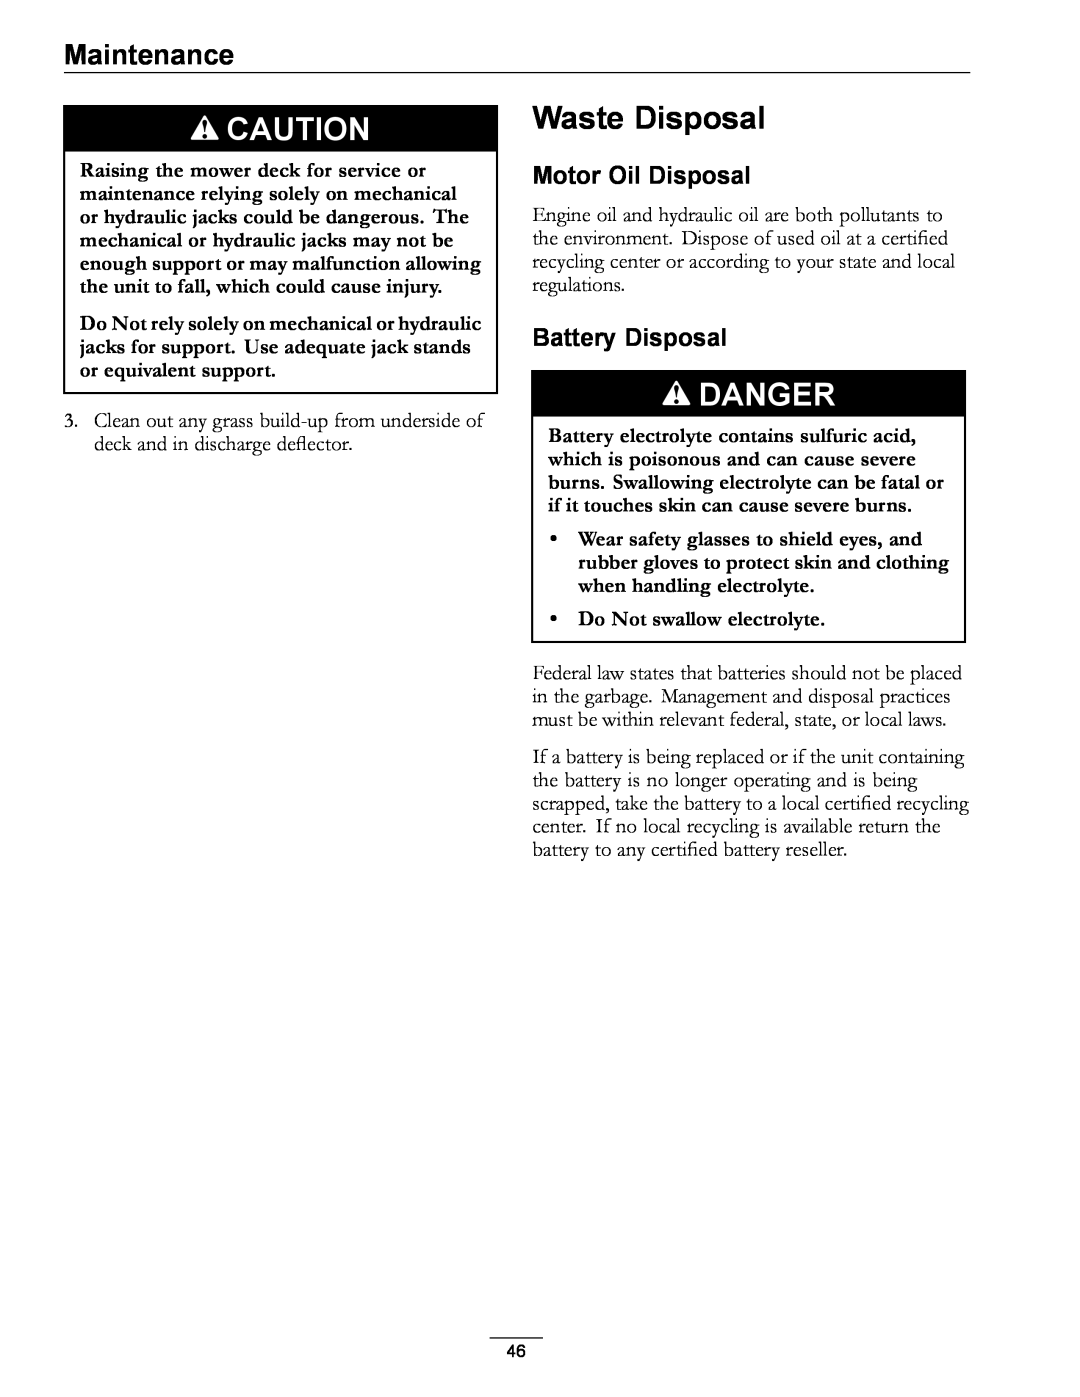 Exmark 4500-507 Waste Disposal, Motor Oil Disposal, Battery Disposal, Do Not swallow electrolyte, Danger, Maintenance 